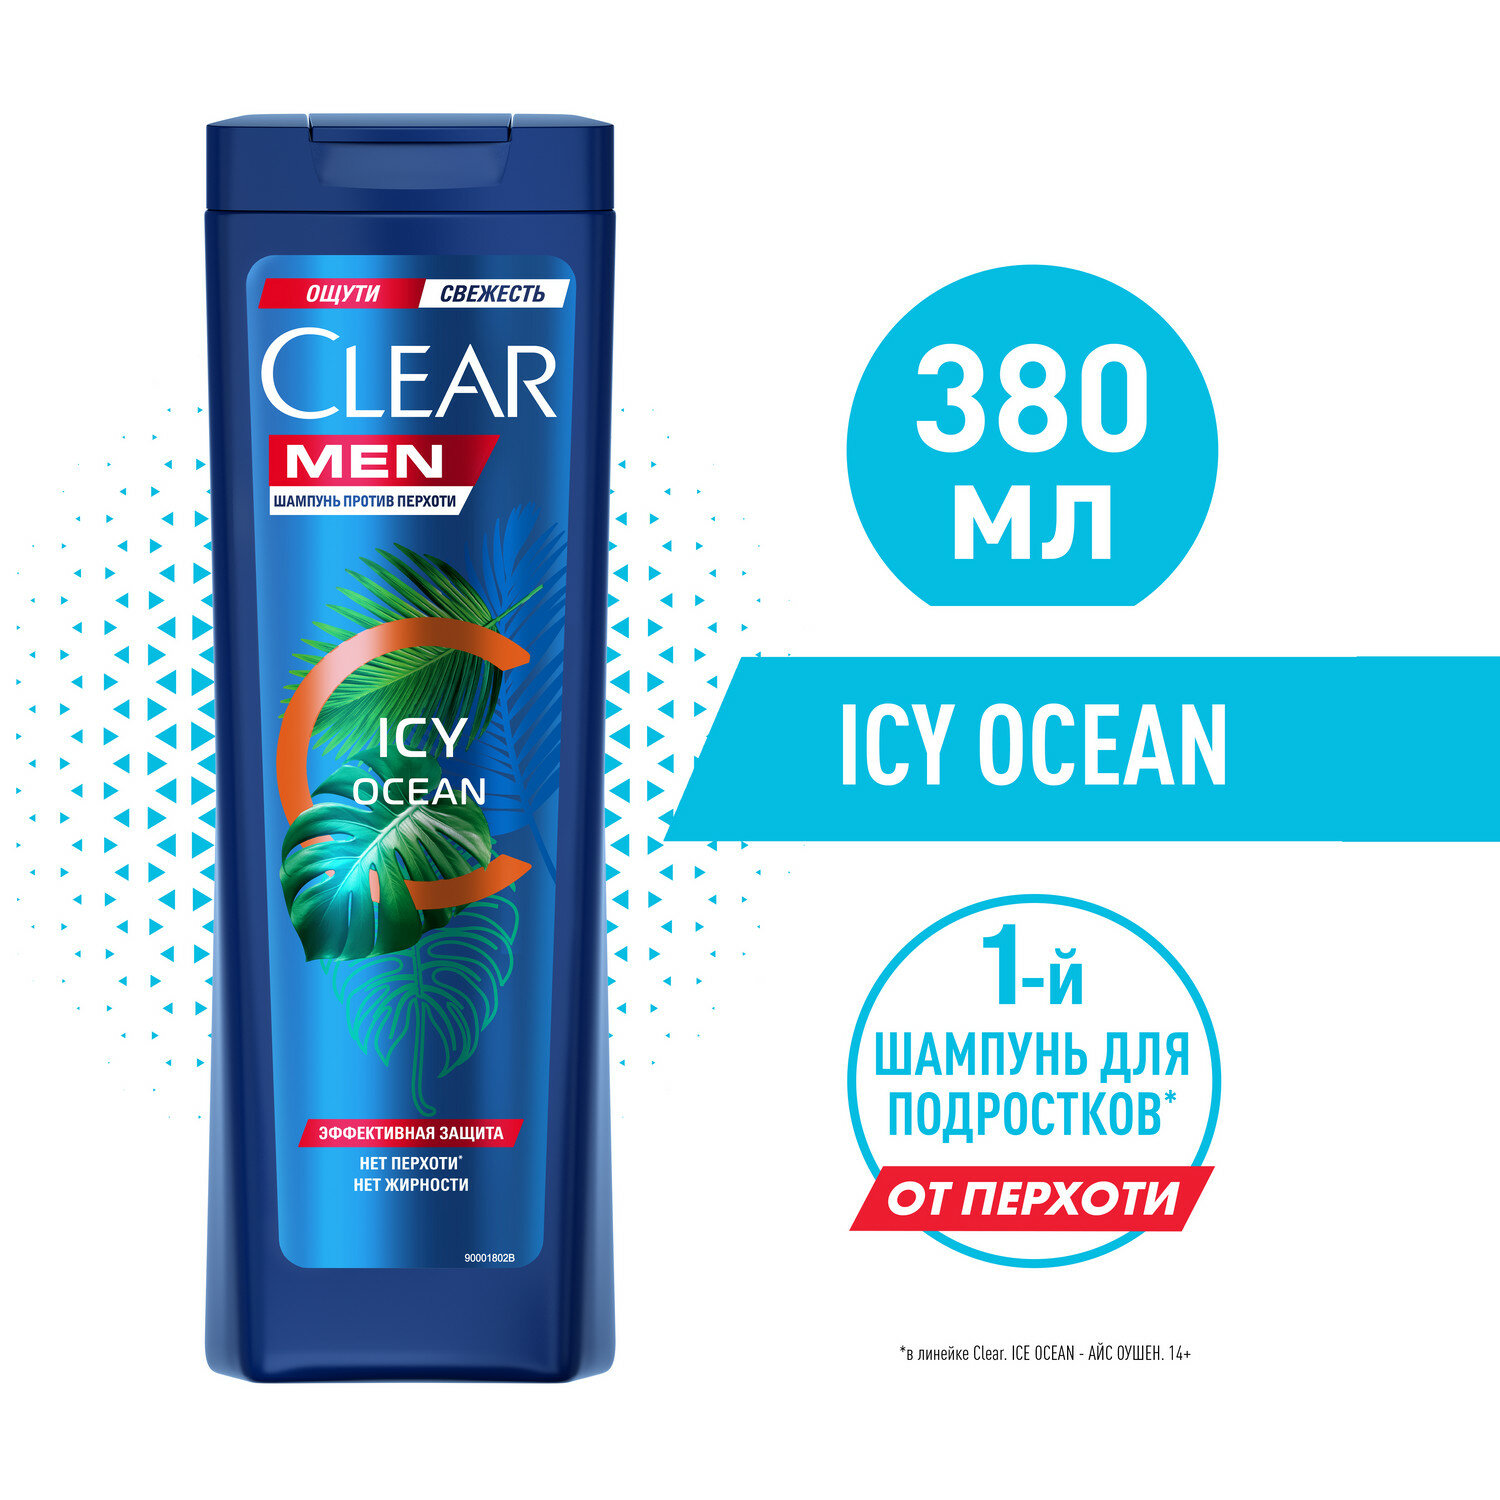 Clear шампунь для волос Men Icy Ocean против перхоти, 380 мл